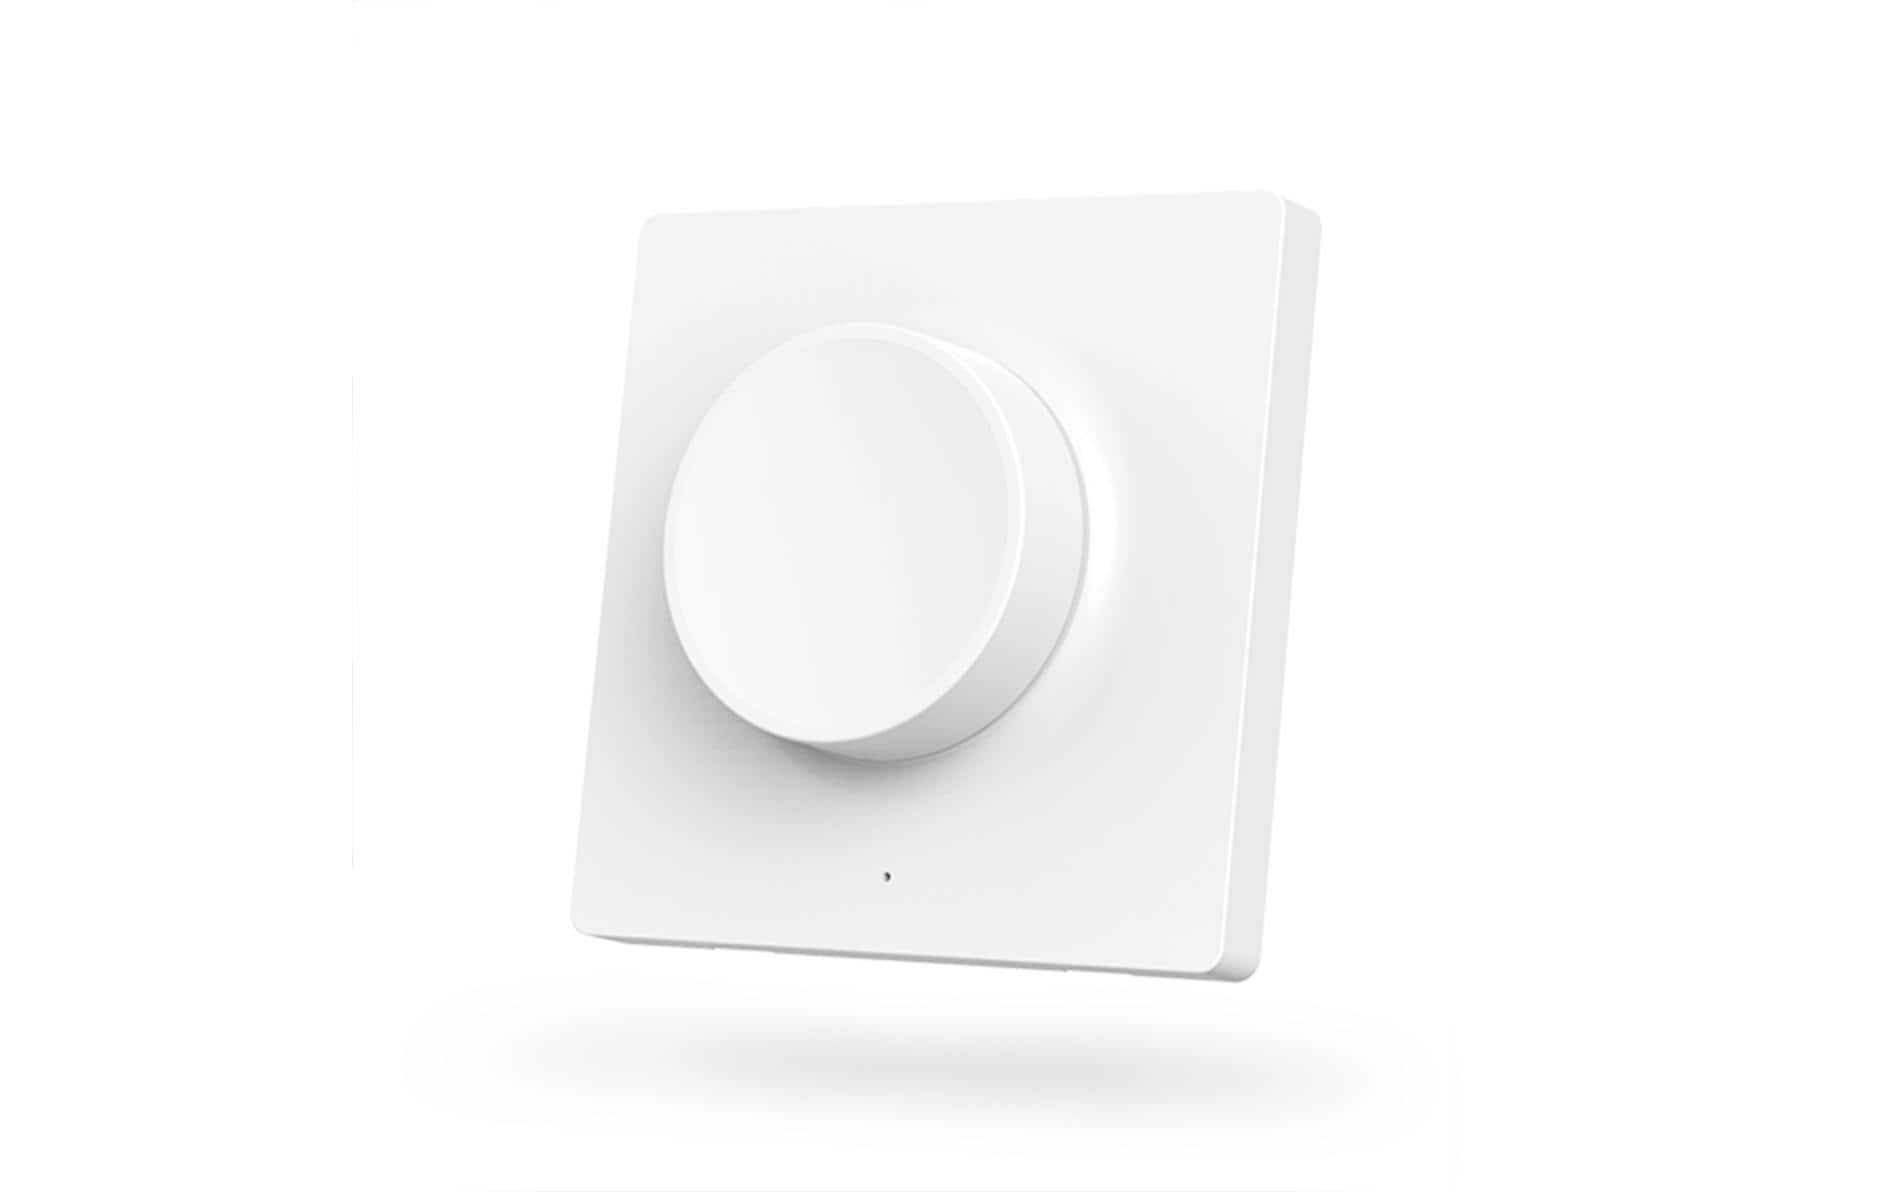 Yeelight Smart Switch Bluetooth, Weiss